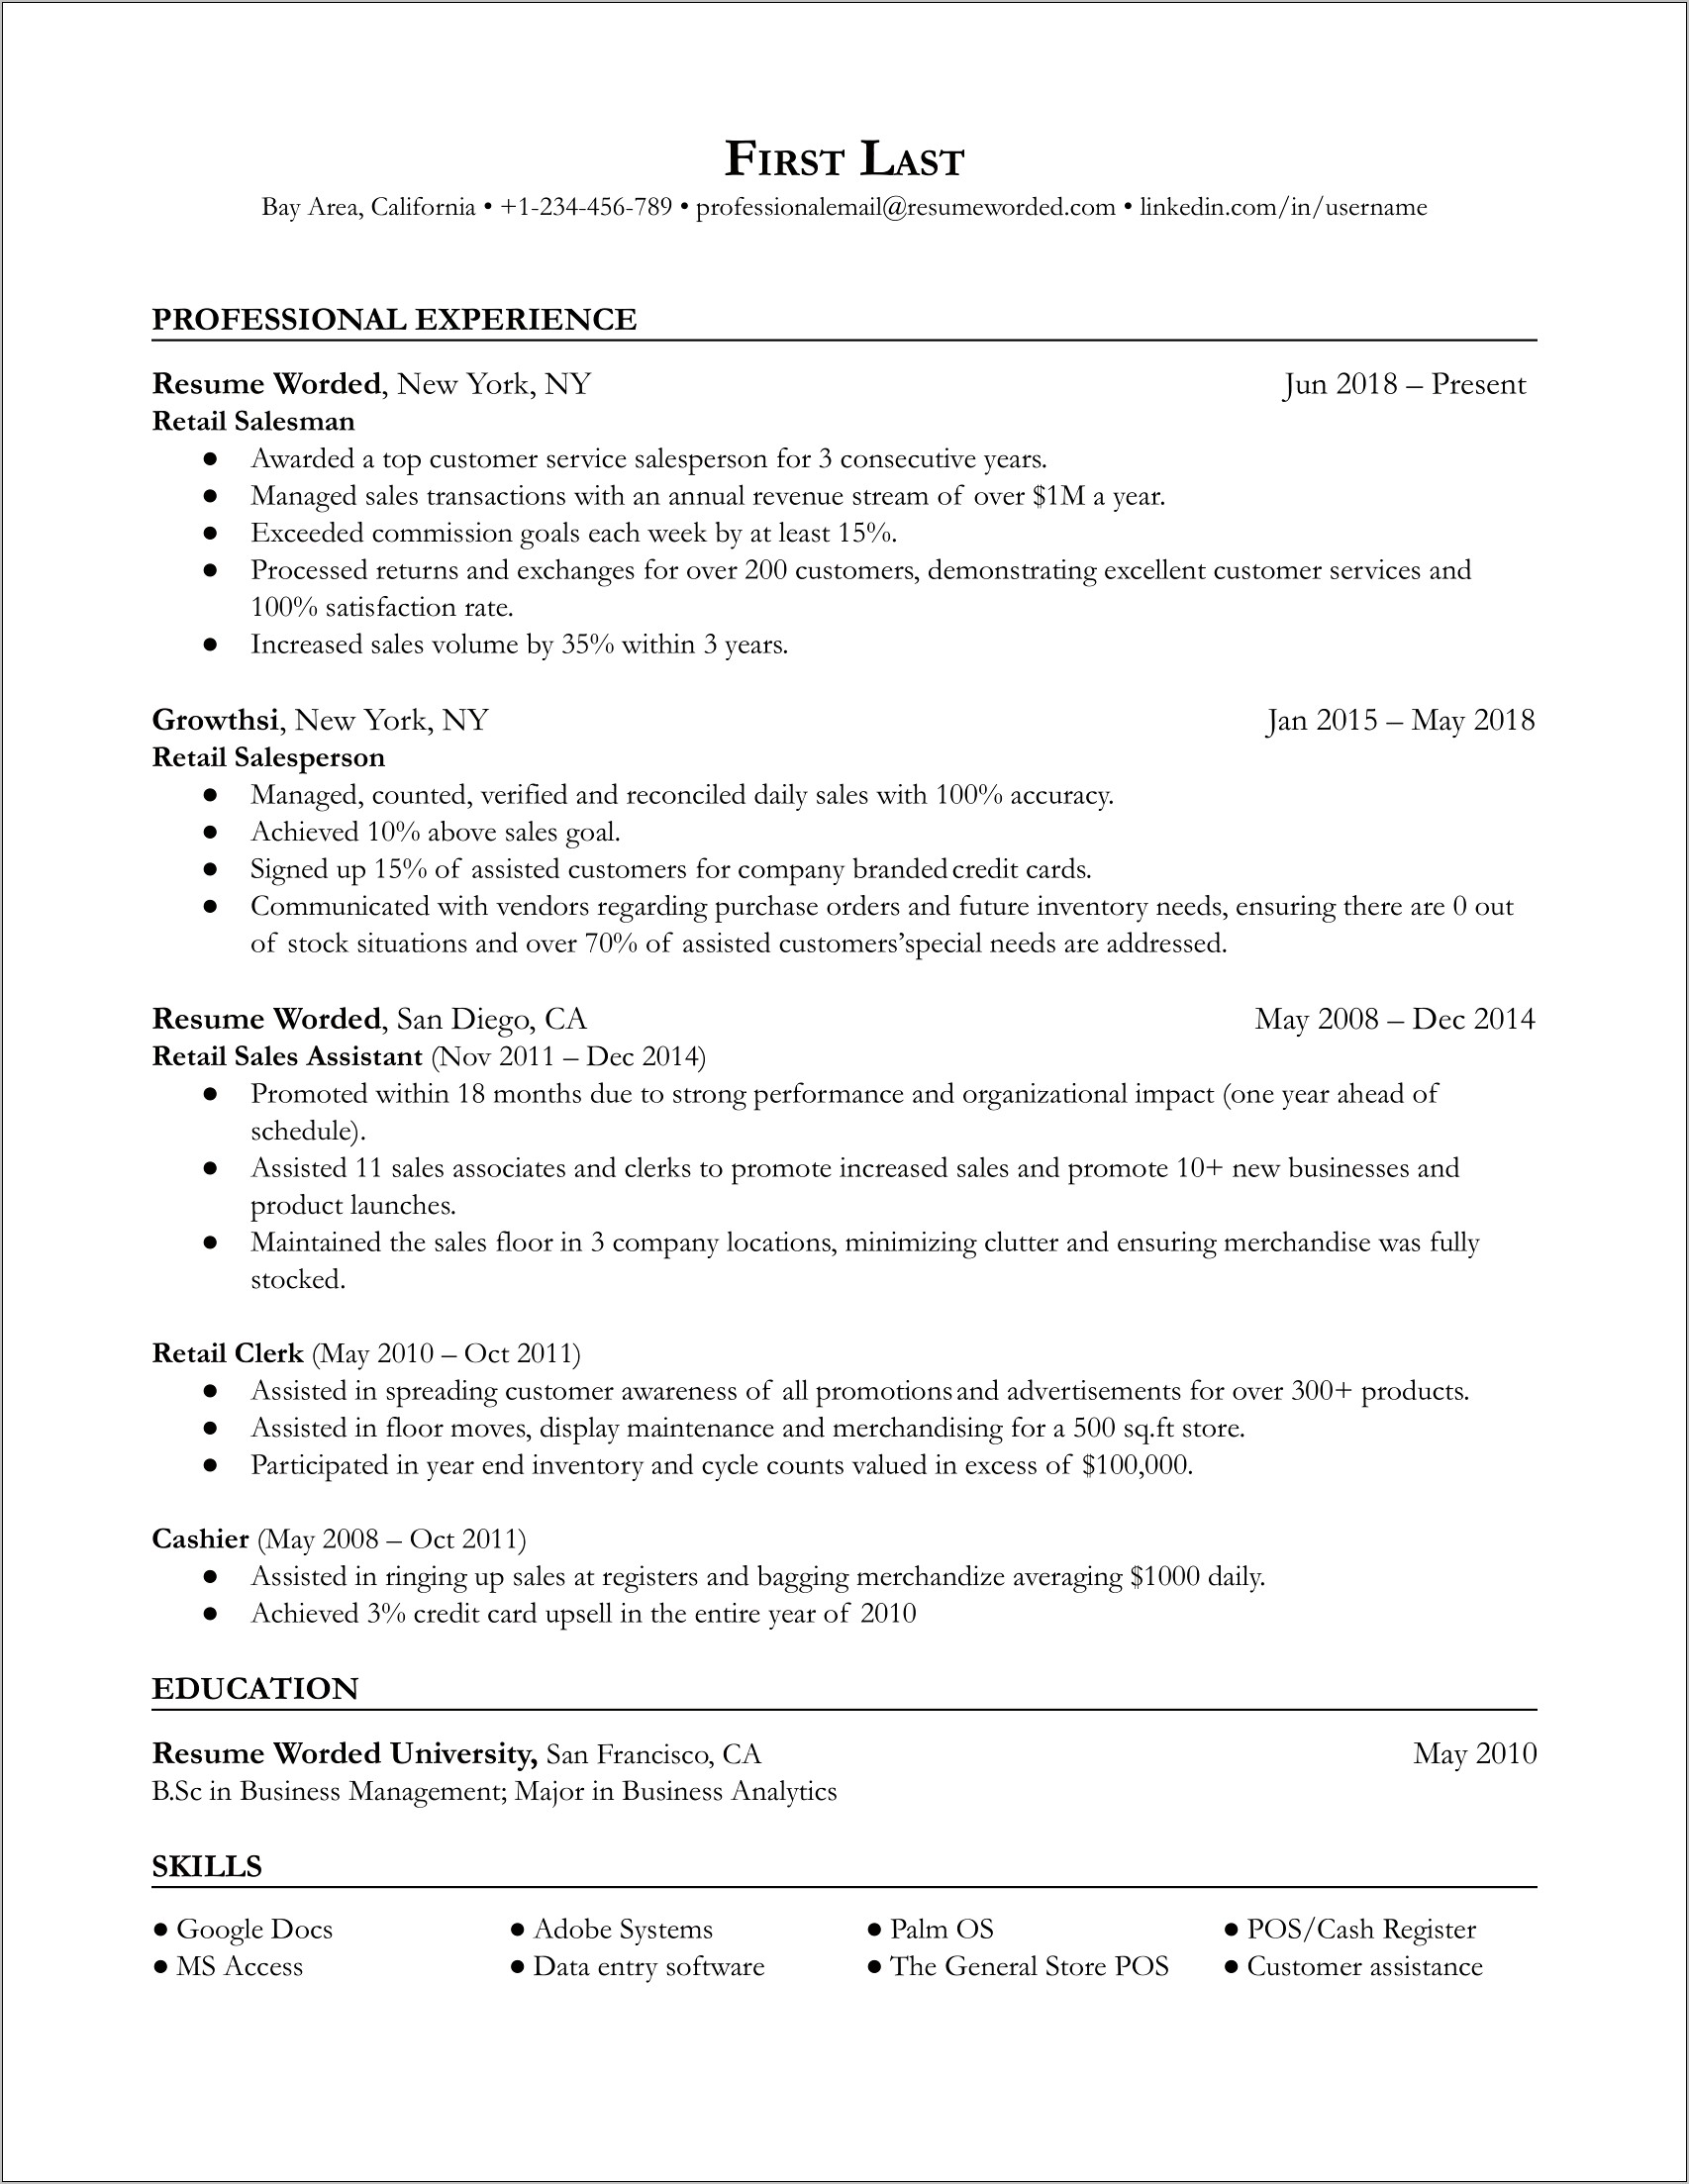 Cashier Stocker Job Description For Resume